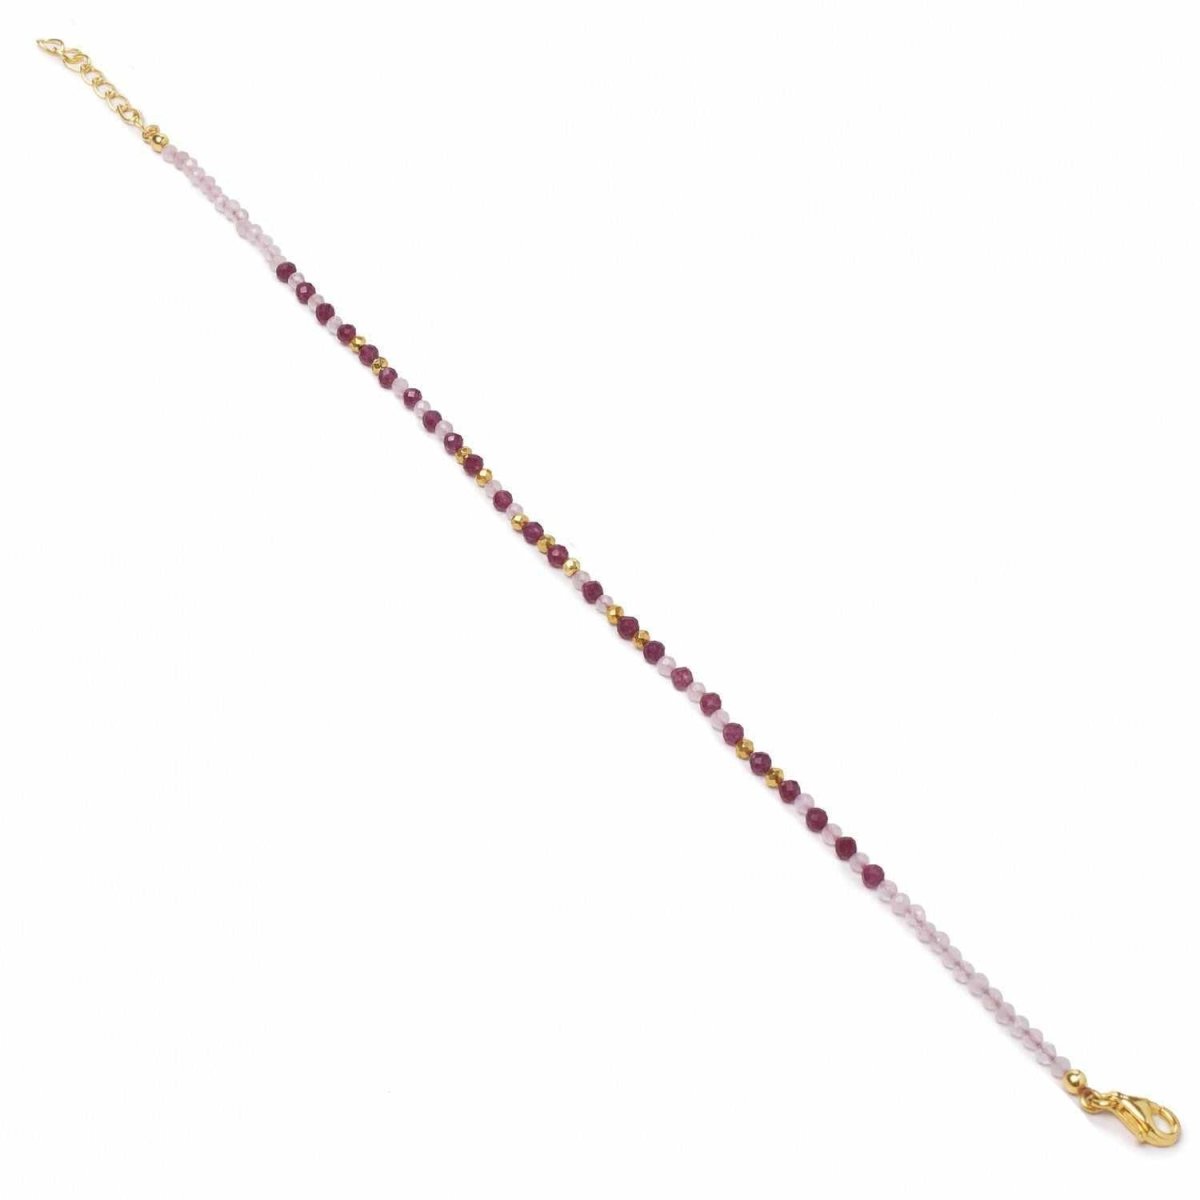 Bracelet - Thin beads bracelets composed of rose quartz